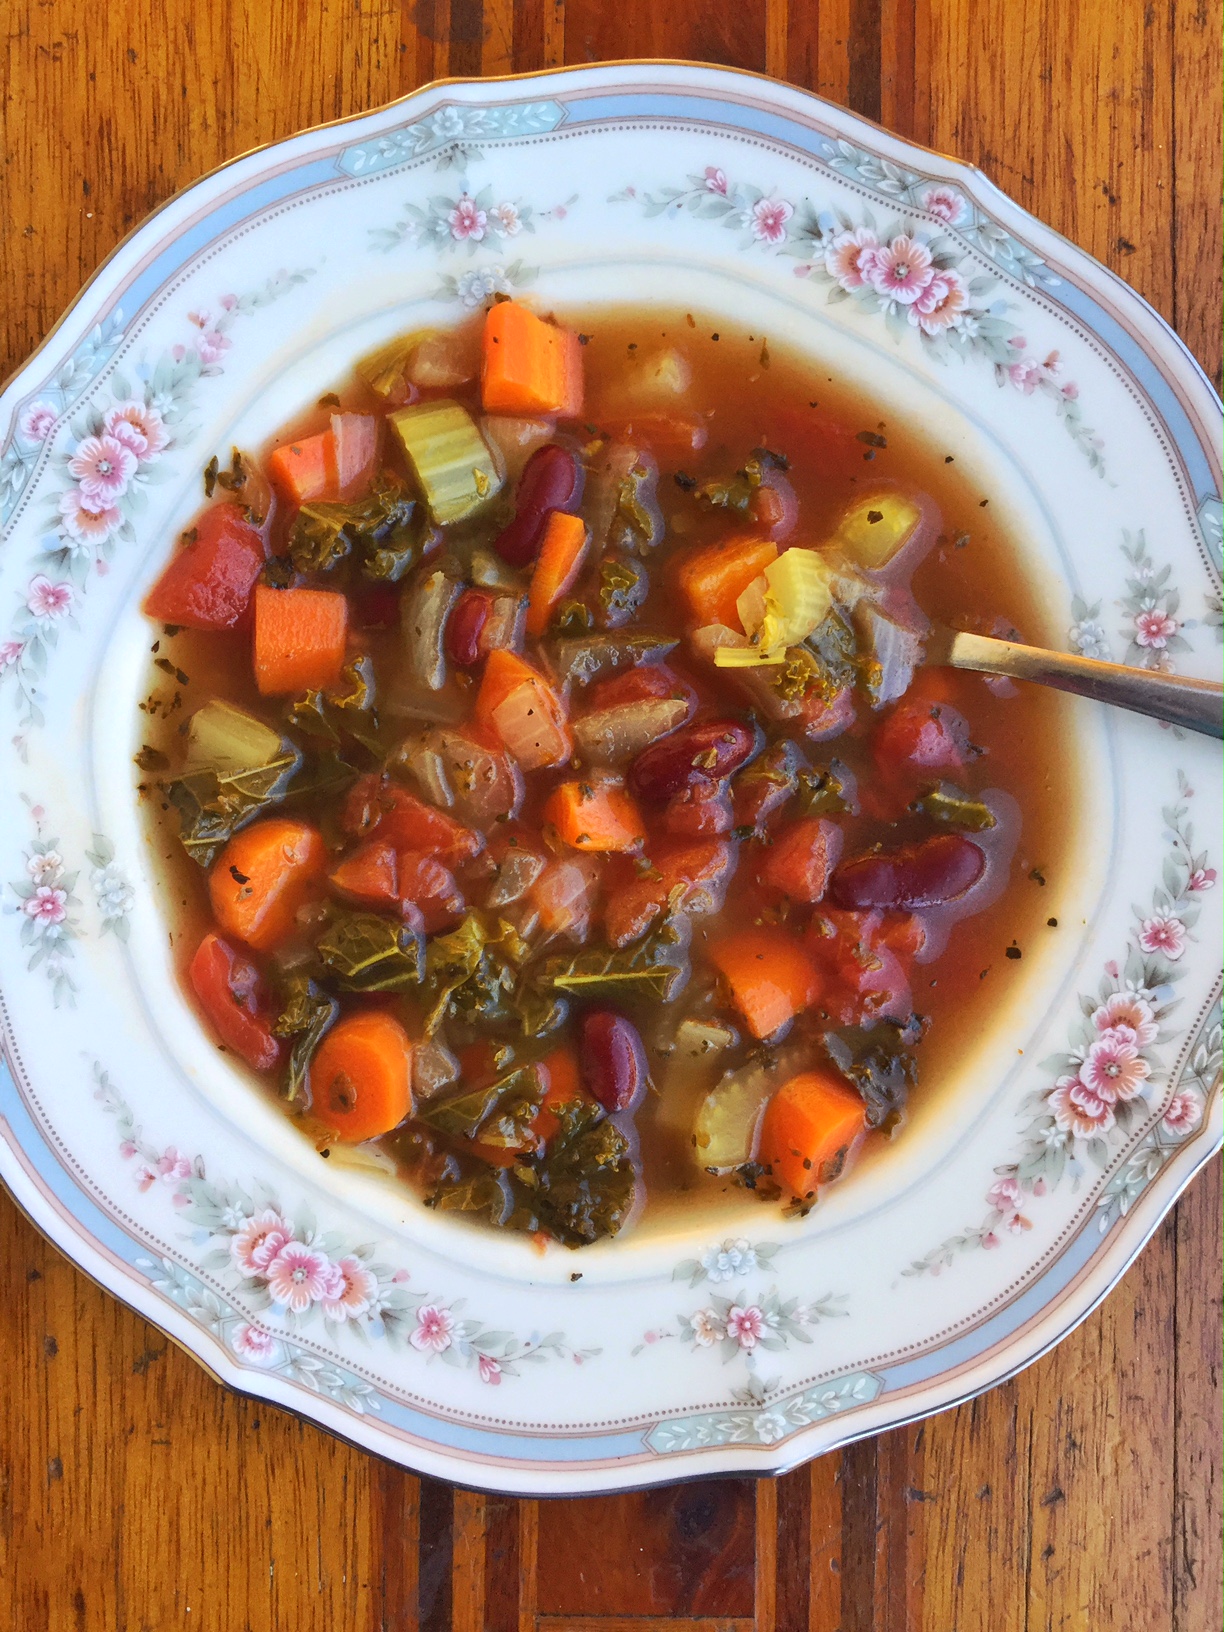 Garden Minestrone Soup (Vegan & Gluten Free) - My Healthy Homemade Life